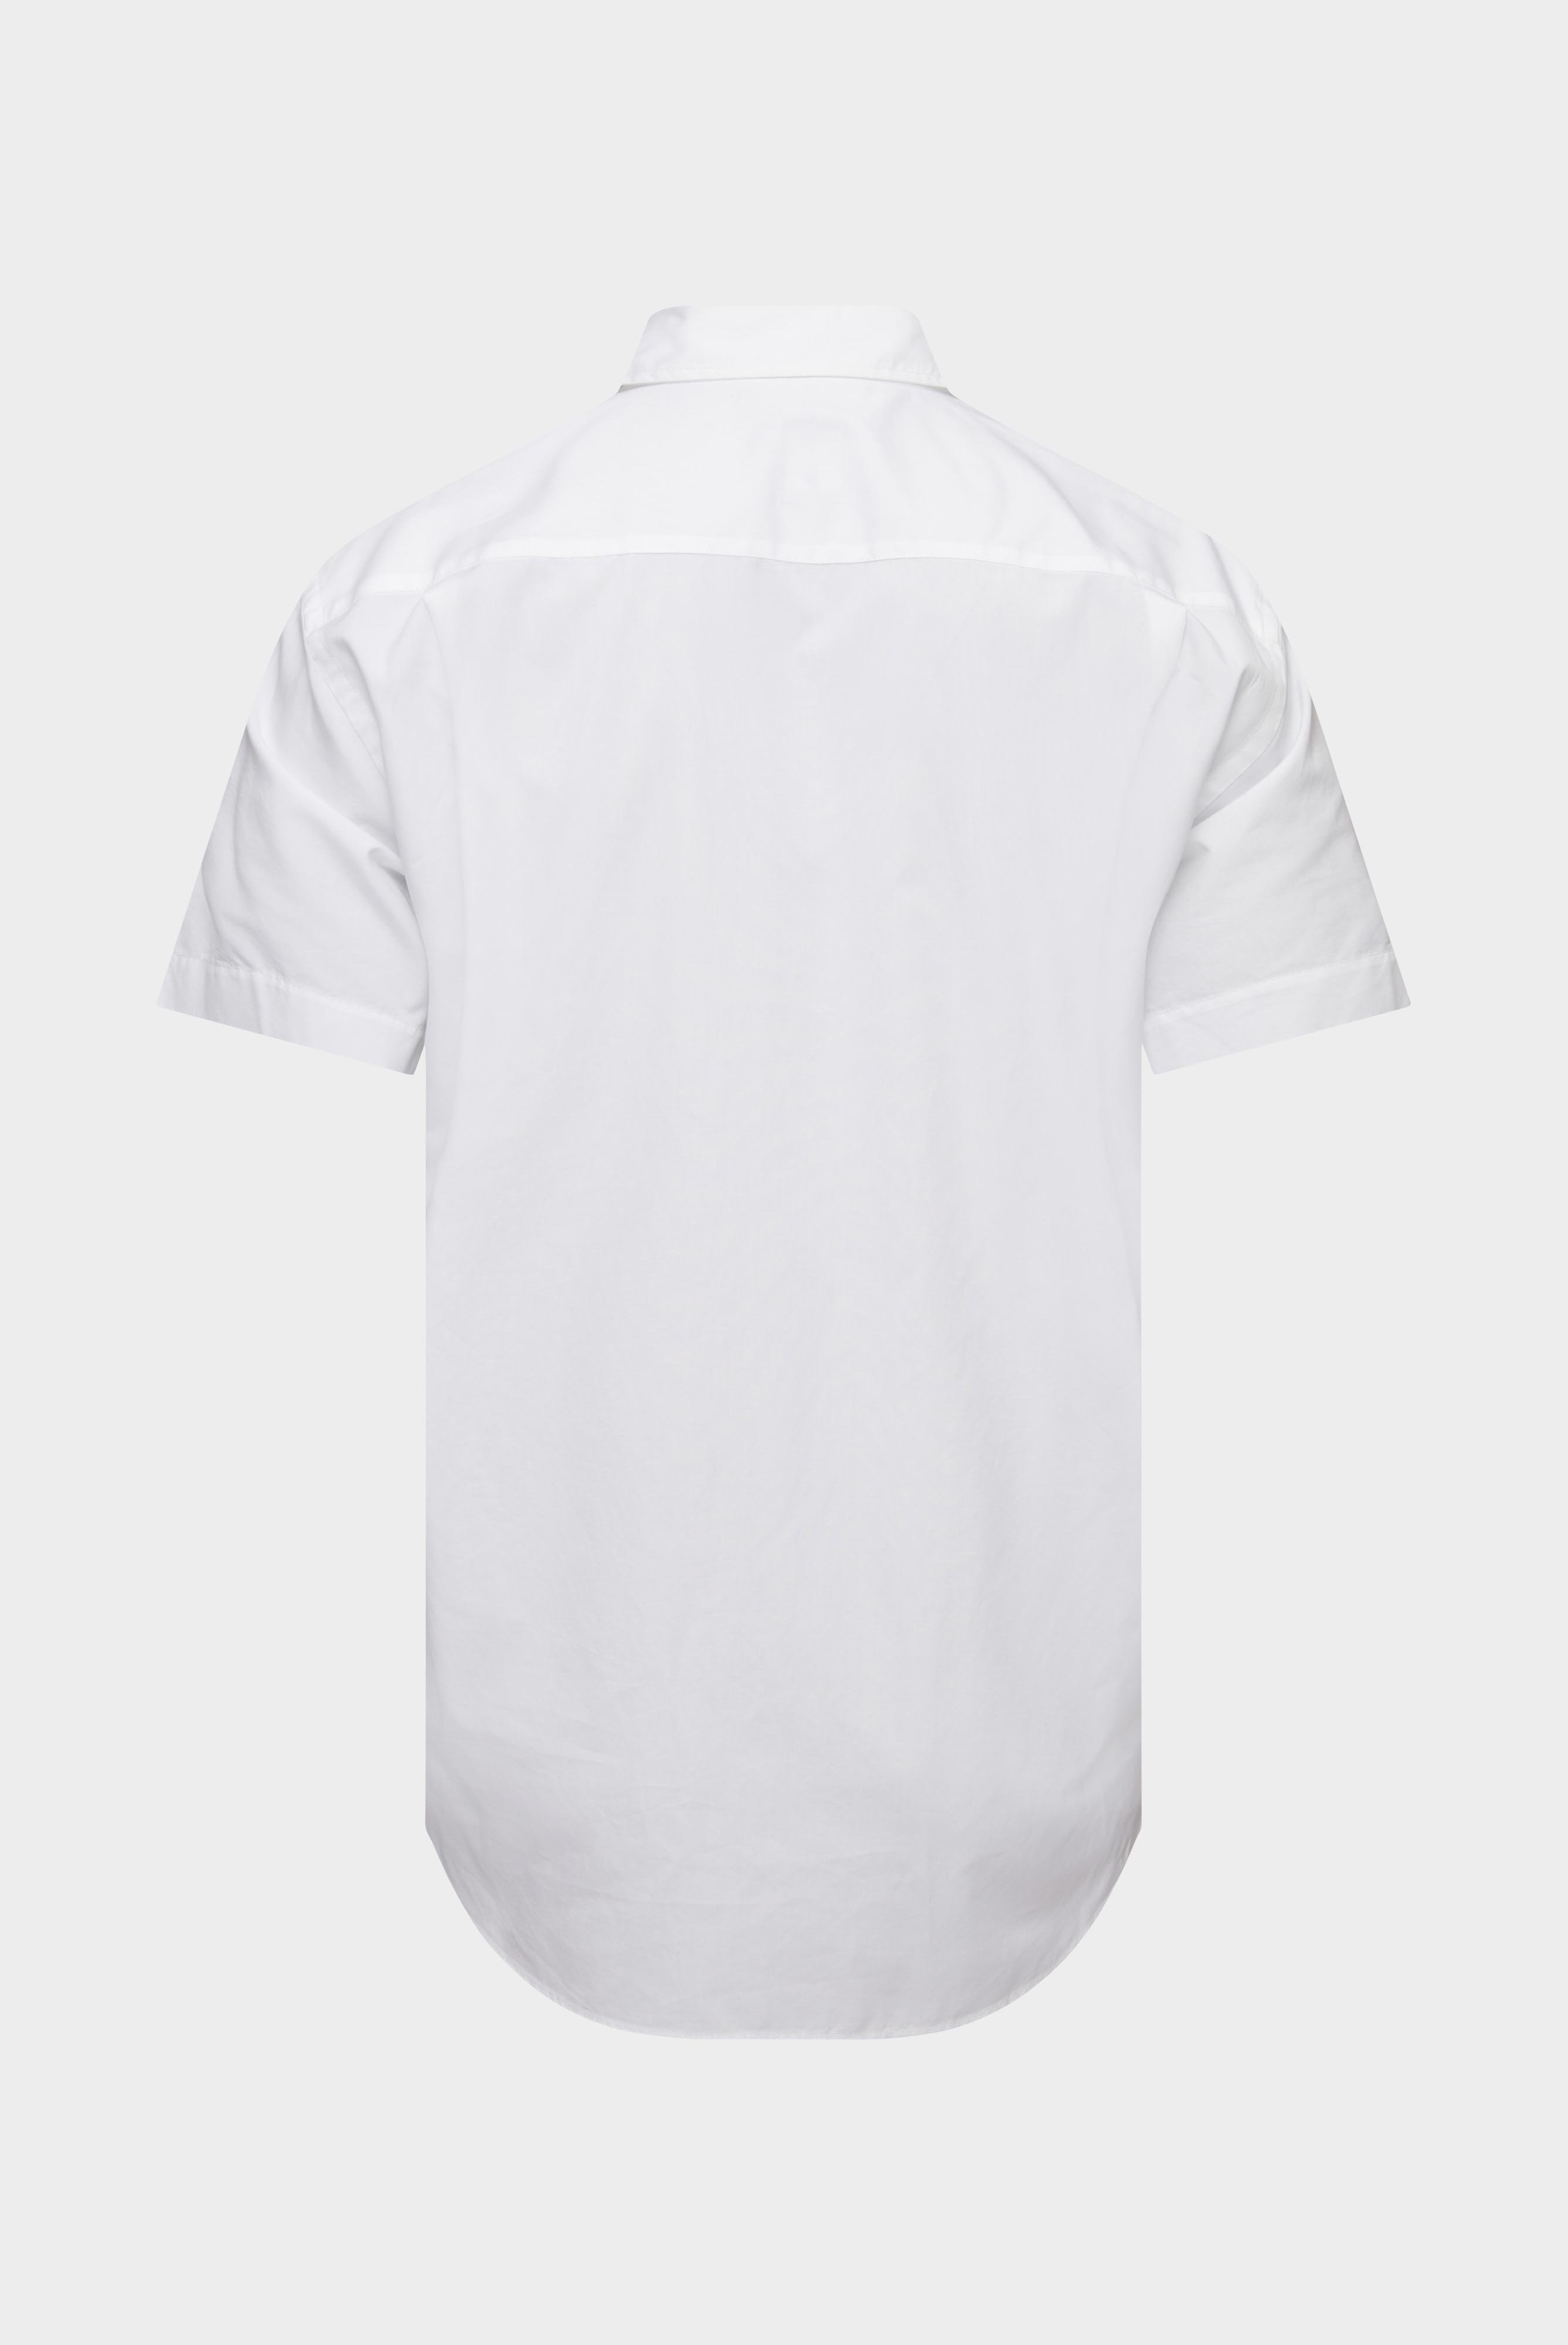 Casual Shirts+Short-sleeved shirt in dark cotton poplin+20.2056.Q2.130648.000.42